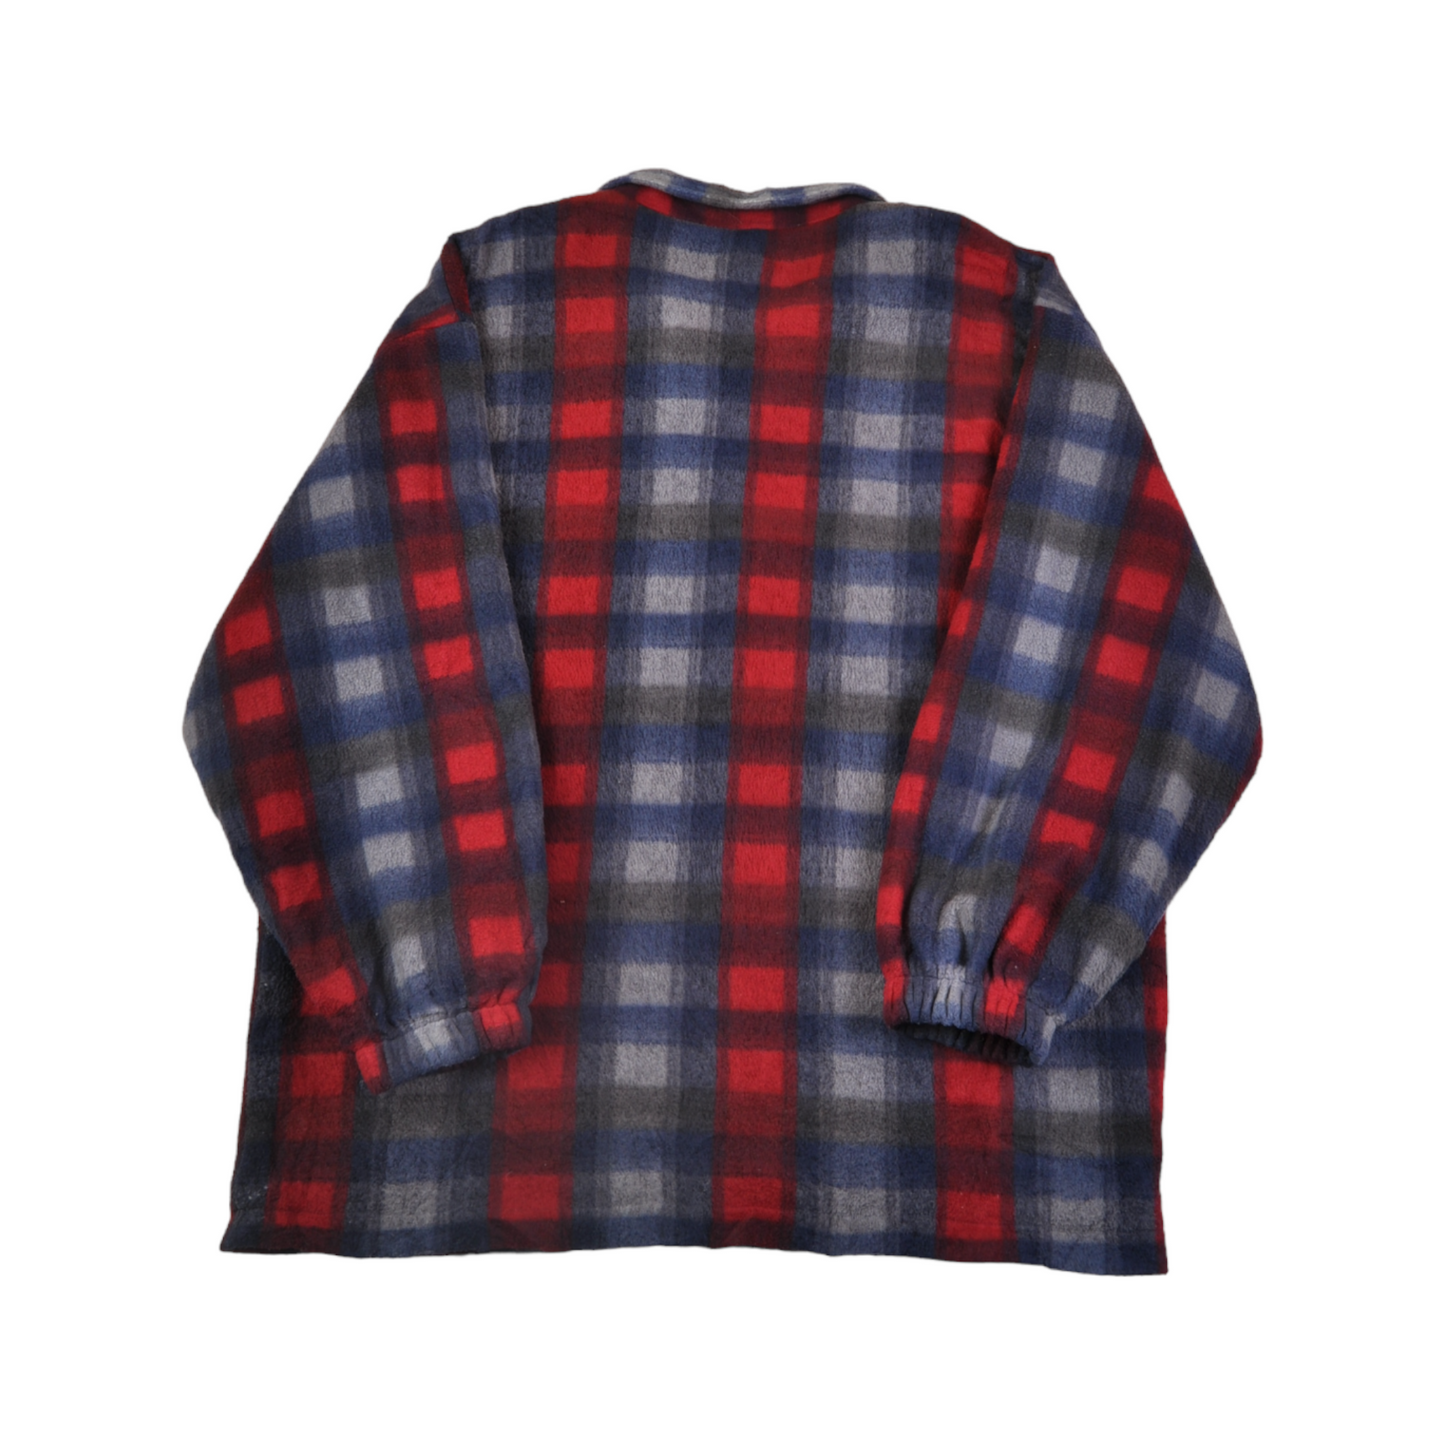 Vintage Fleece Jacket Retro Checked Pattern Red/Grey Large